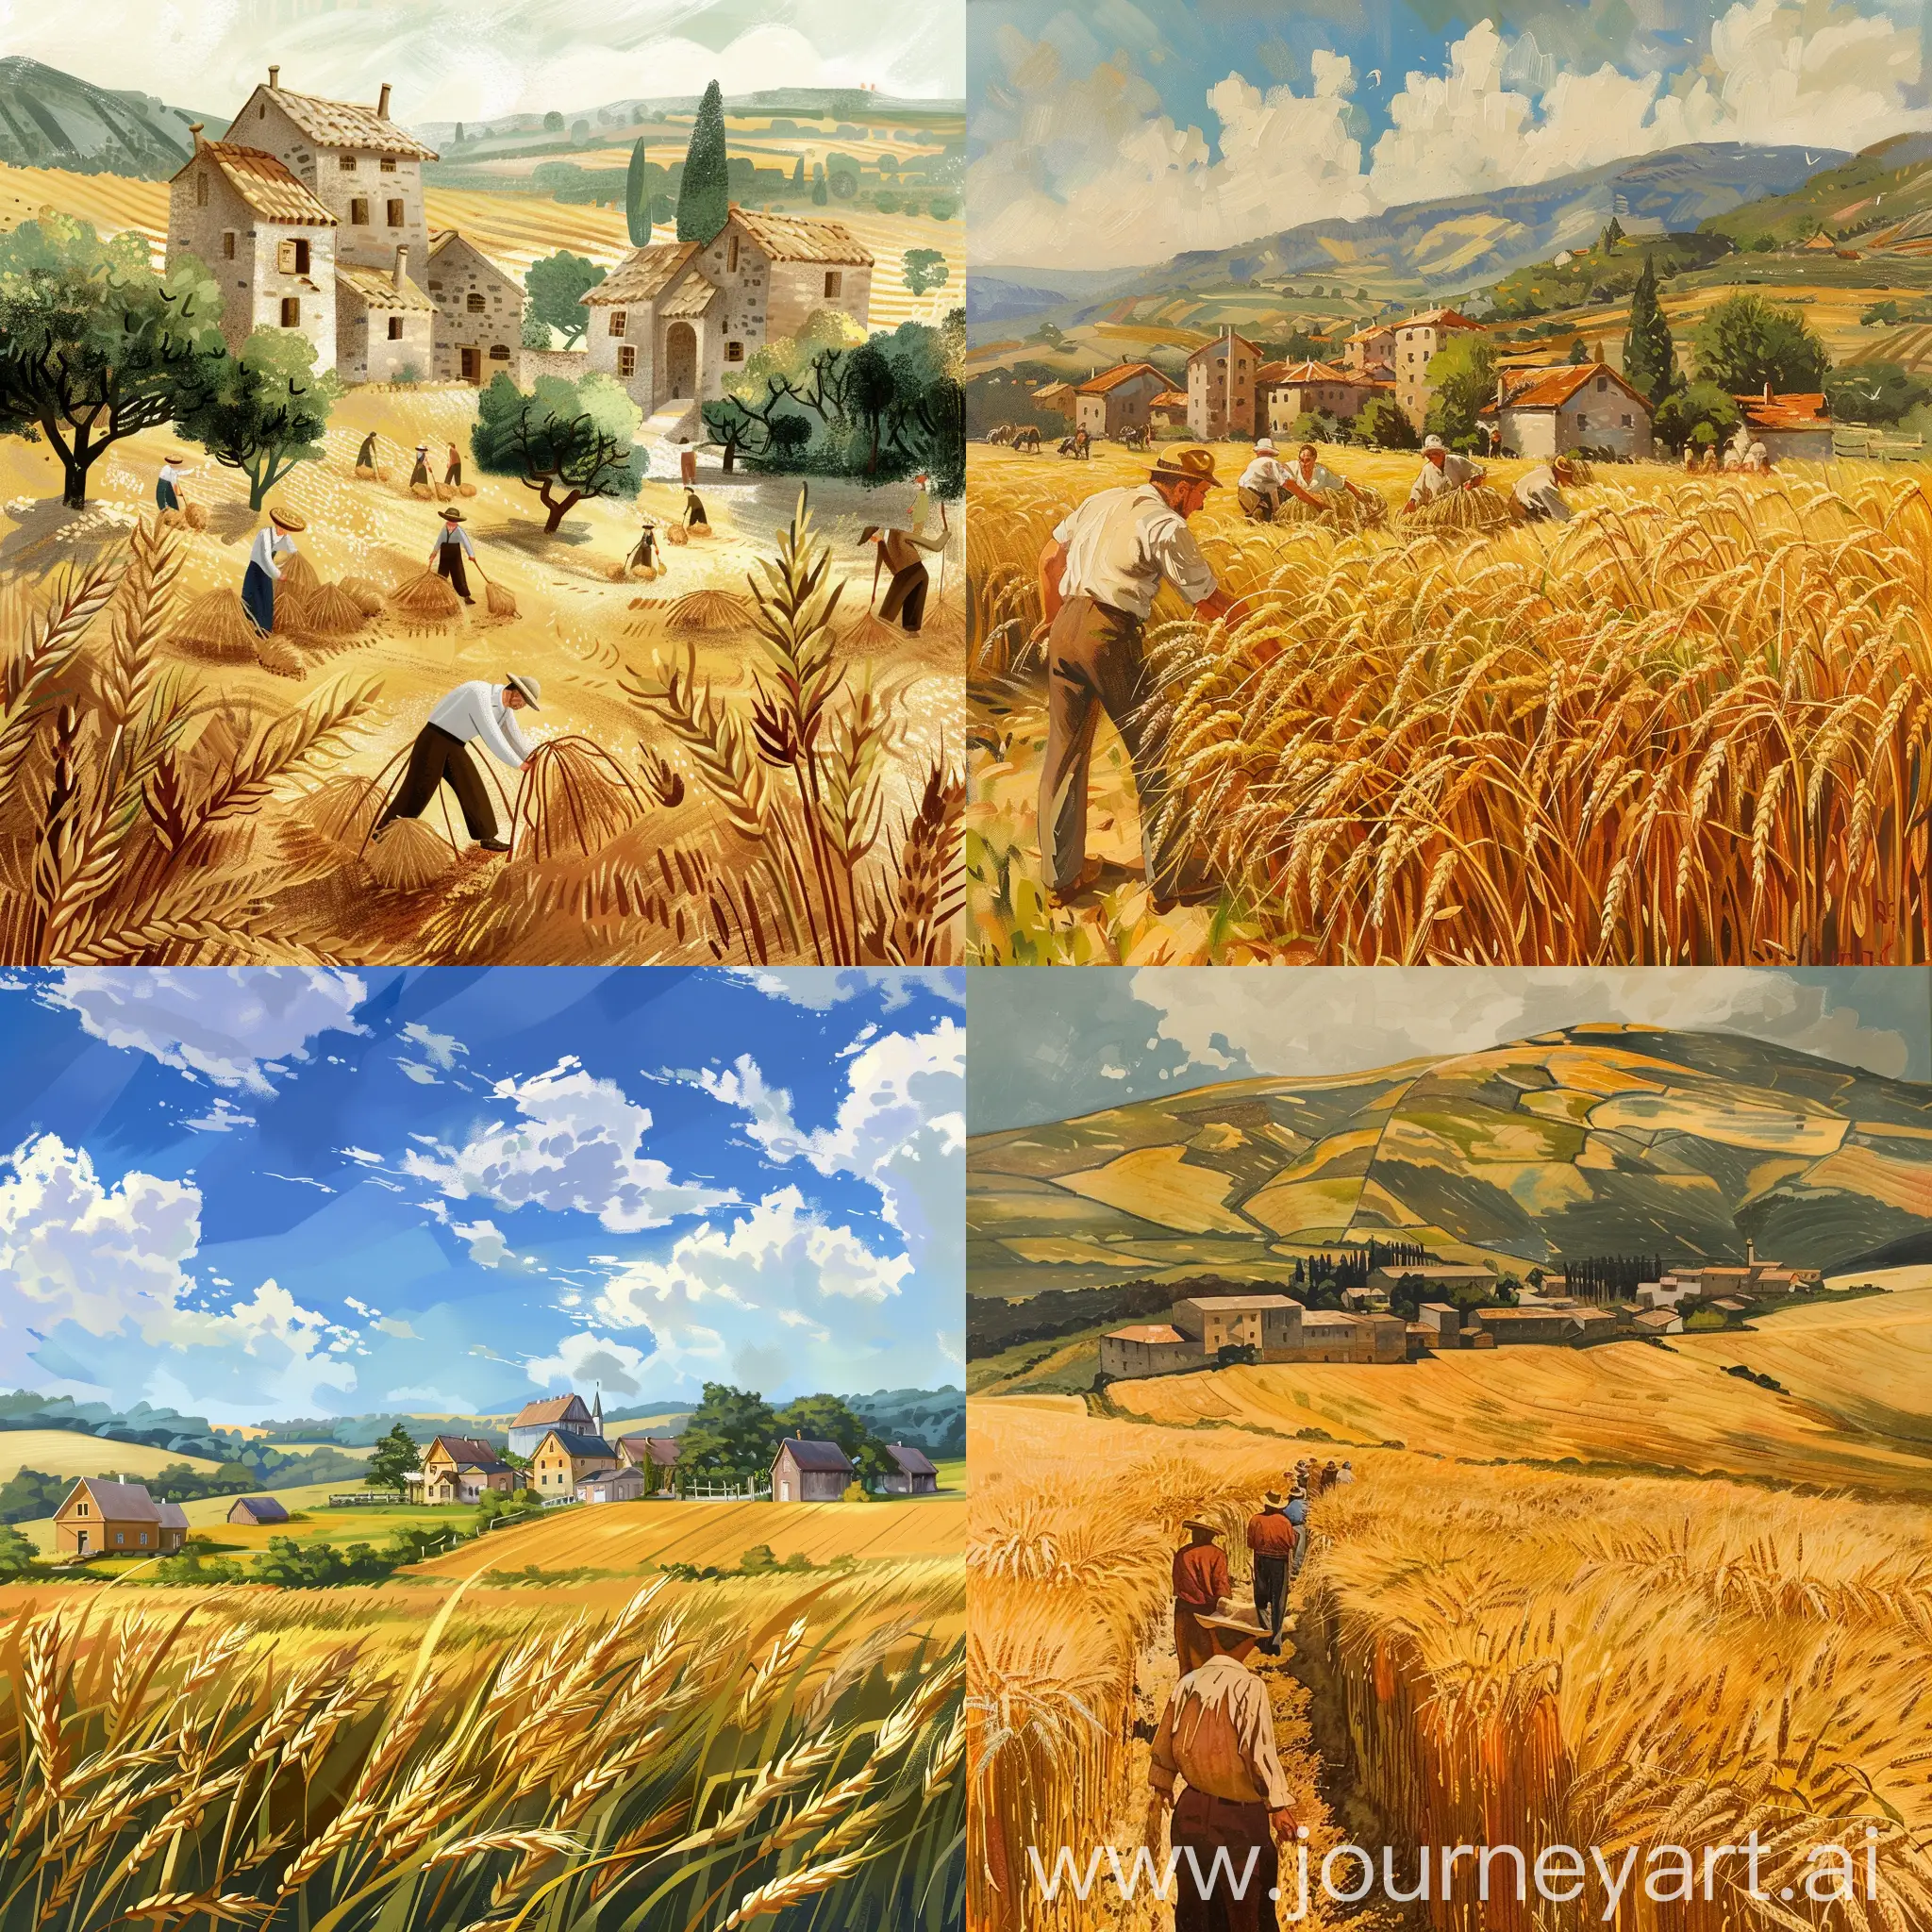 A Village of Wheat Farmers
